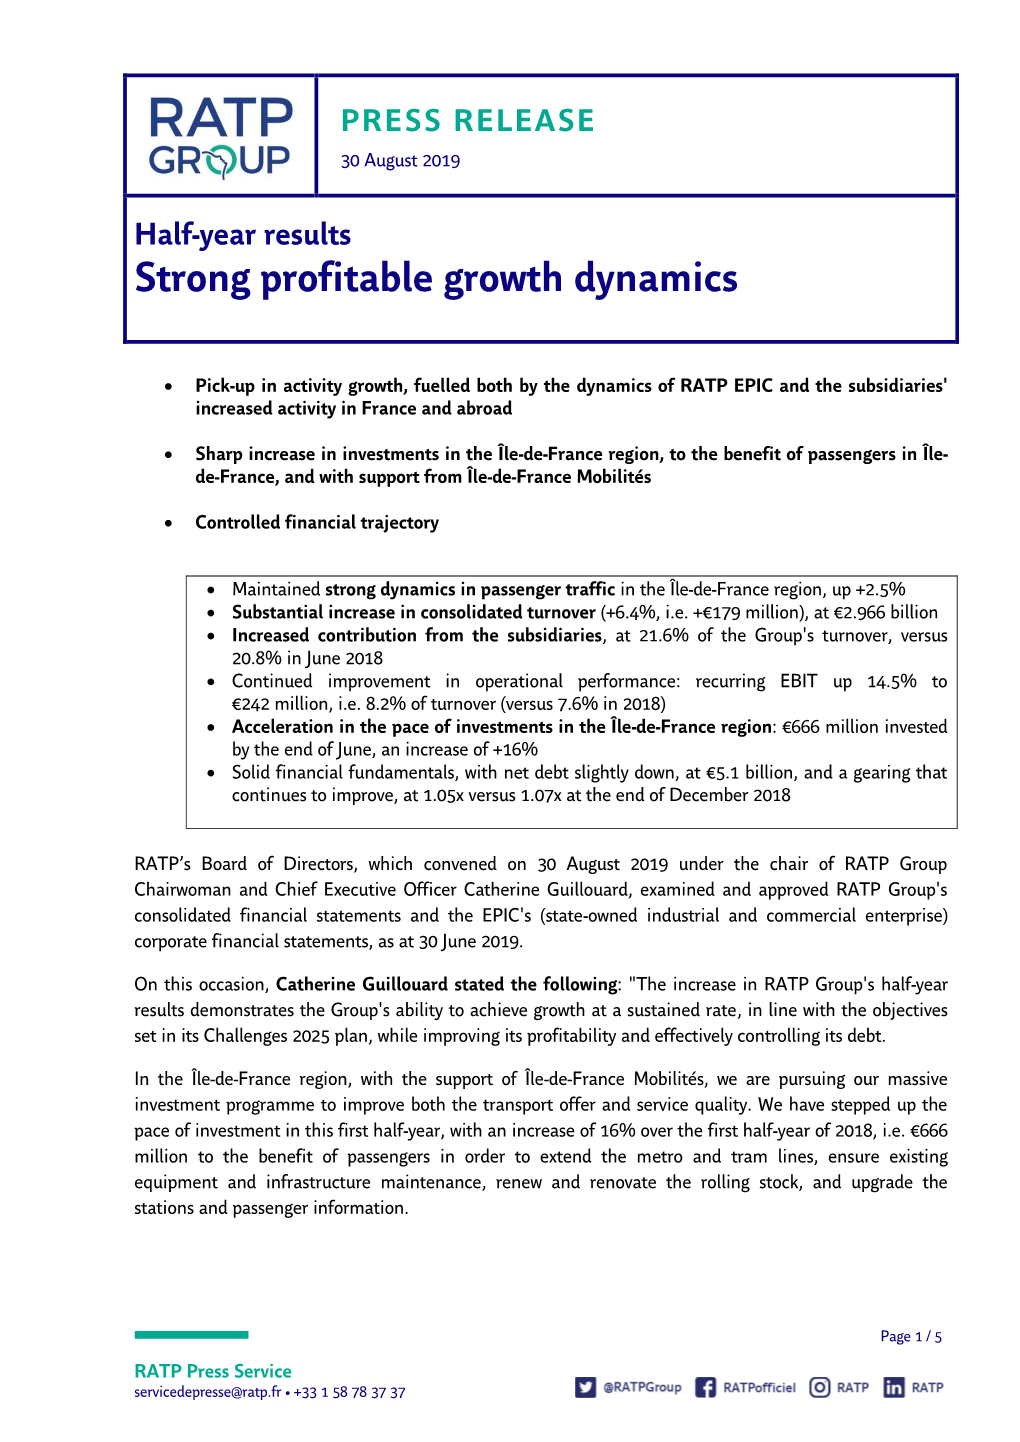 Strong Profitable Growth Dynamics